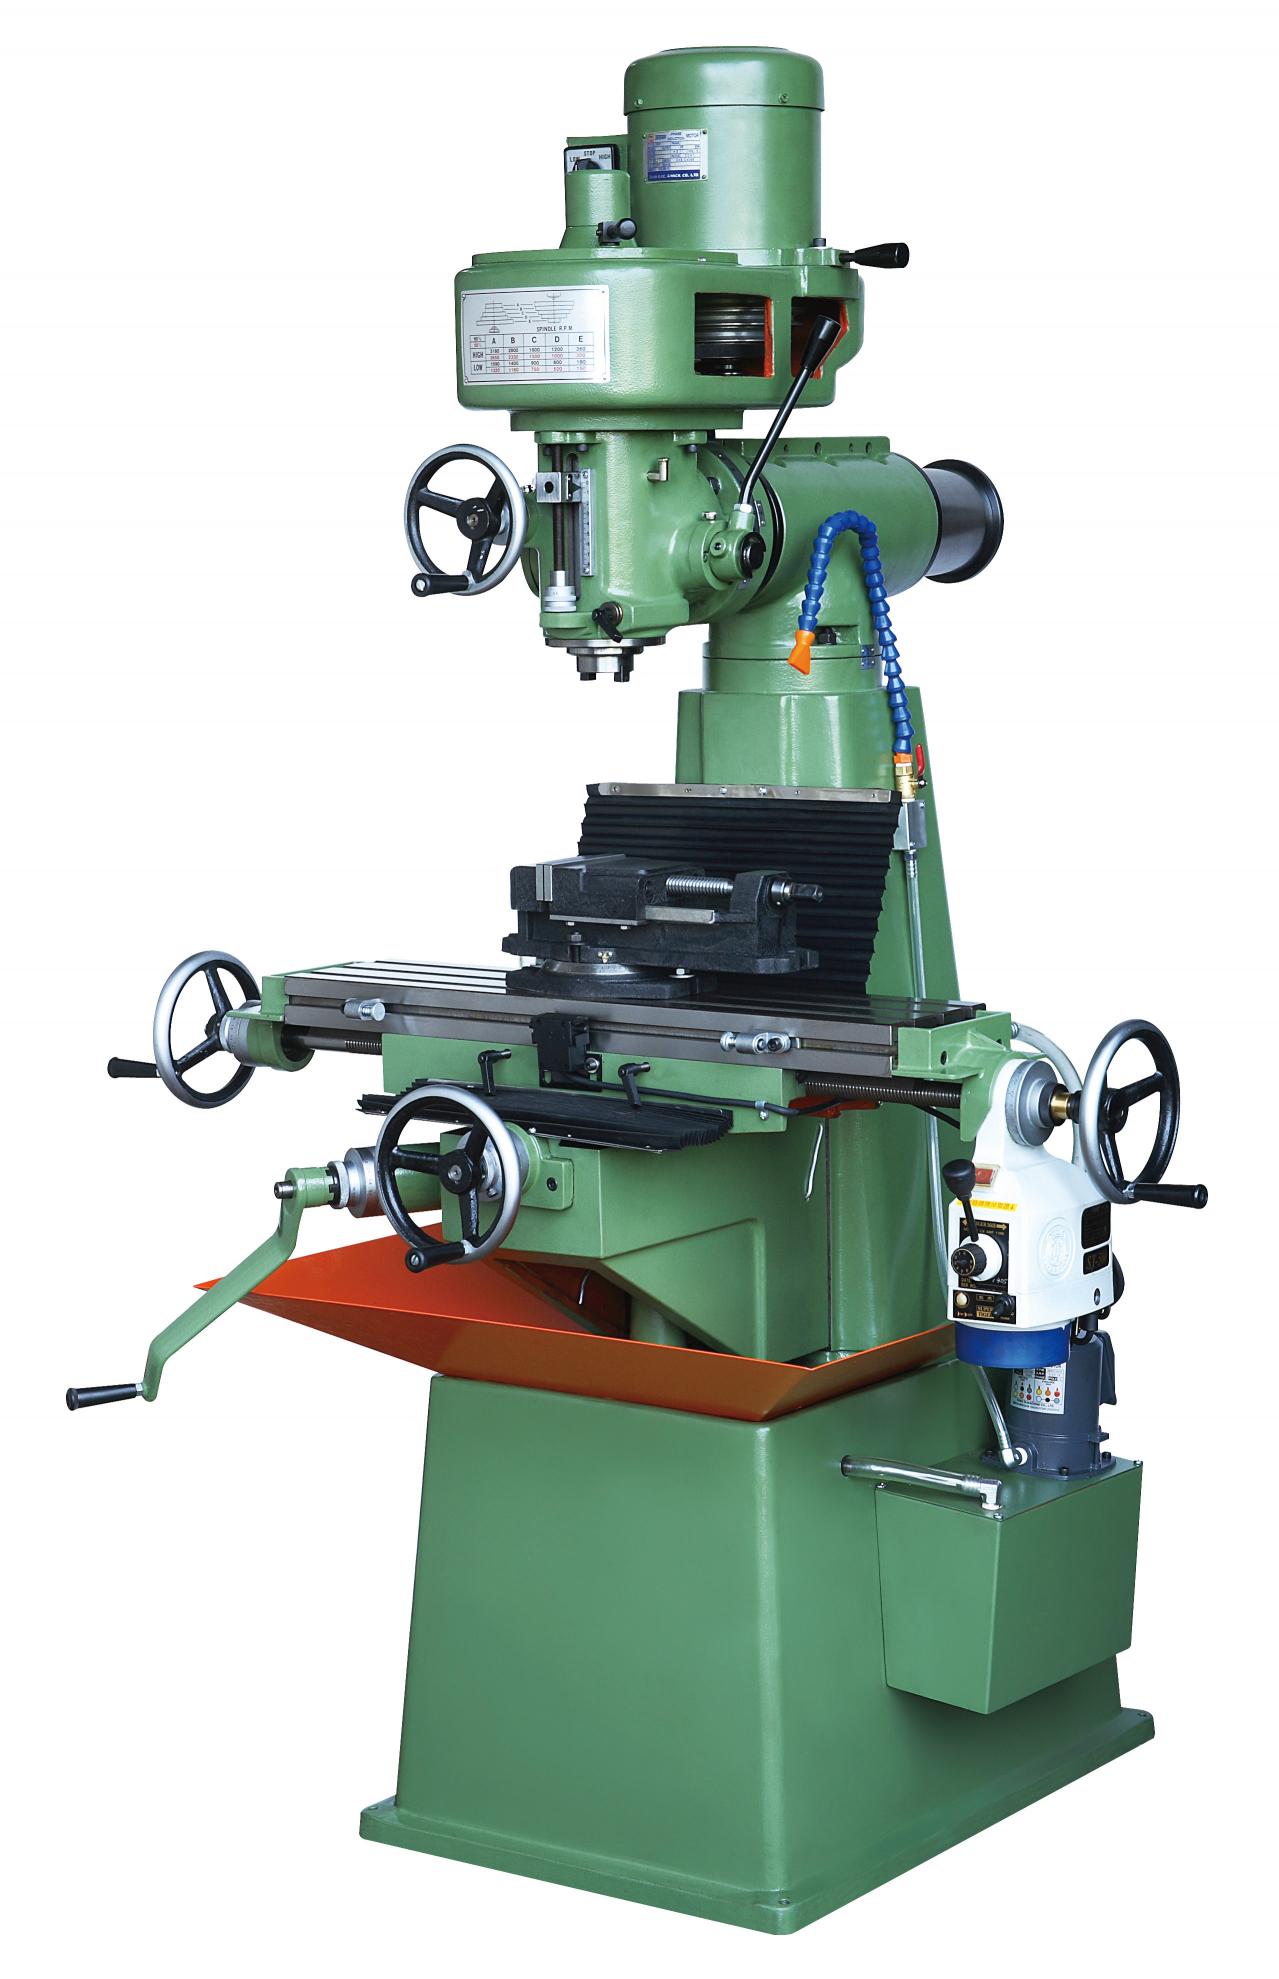 Vertical turret milling machine